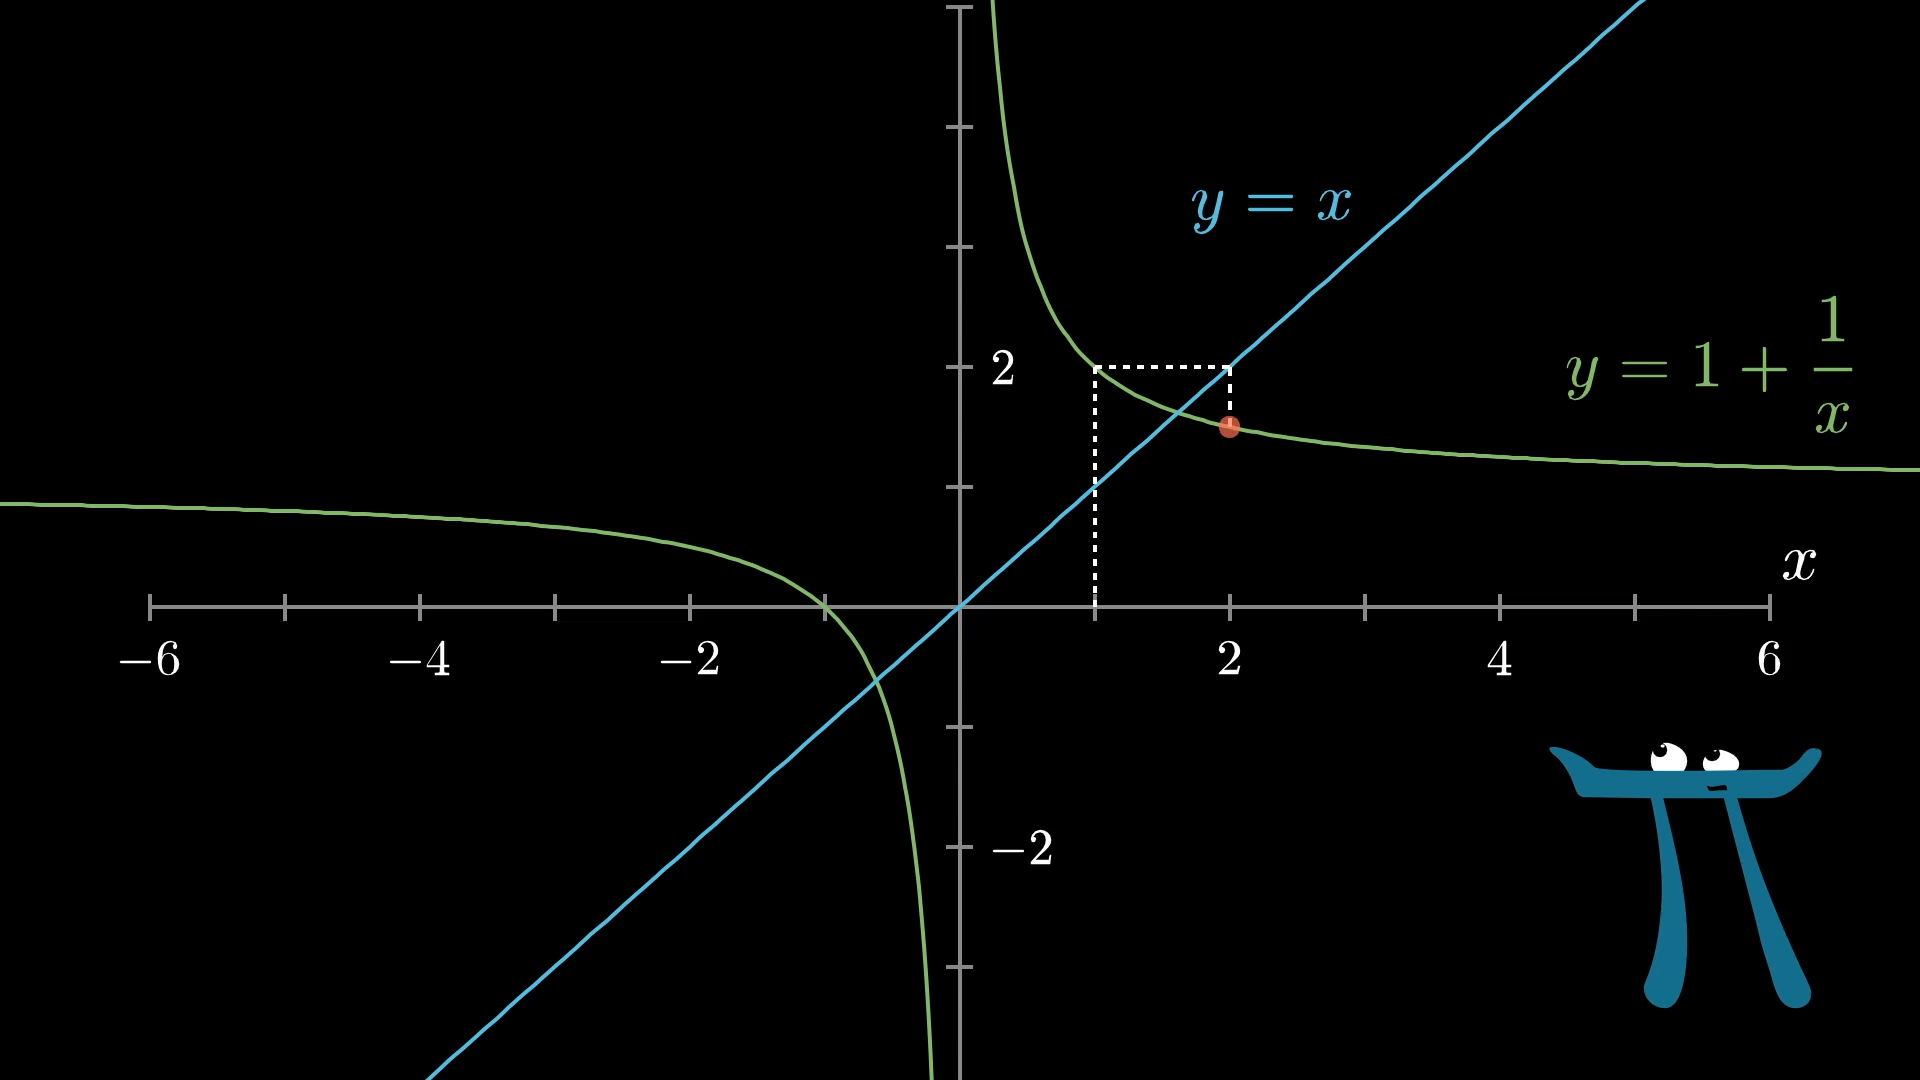 graphical representation of a derivative